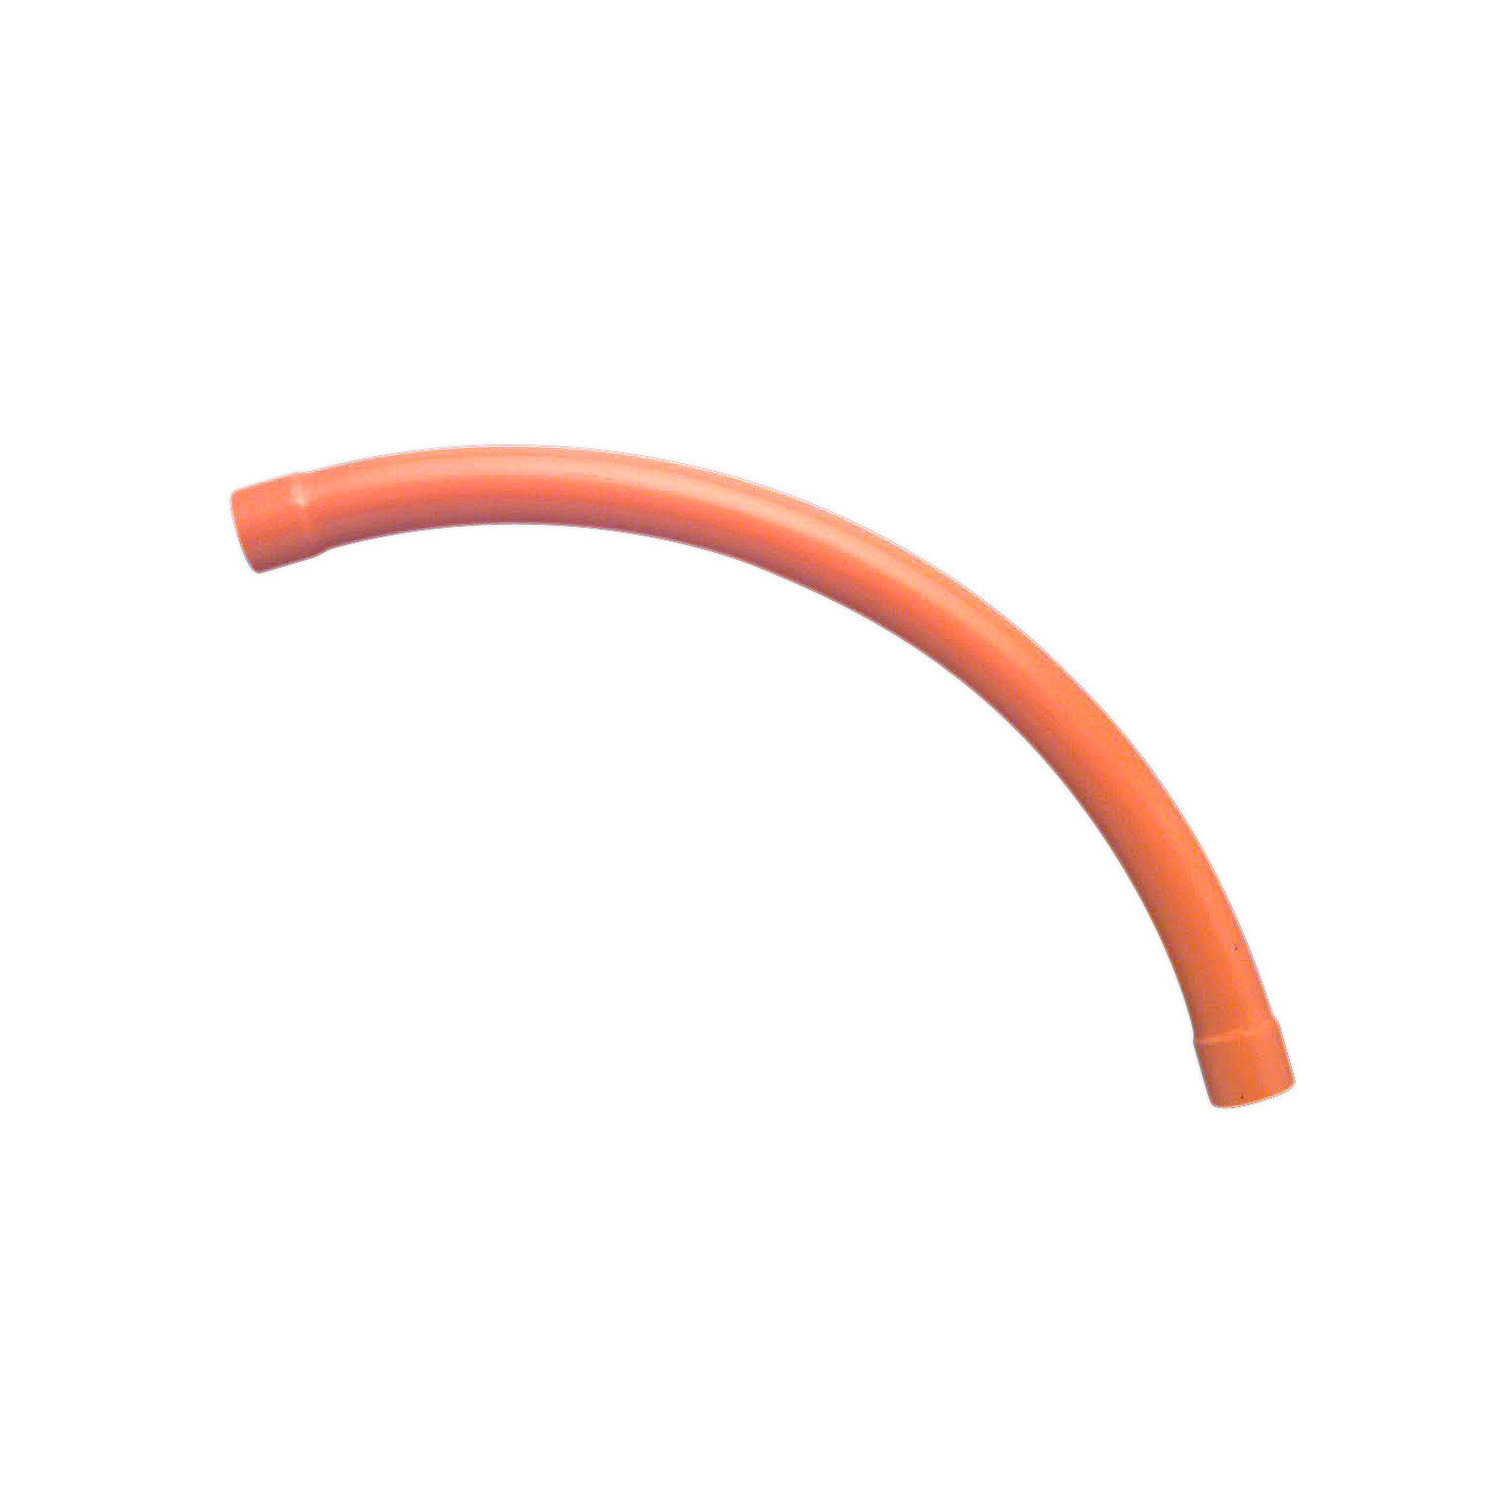 Solid Fittings - PVC, 90 Degree Heavy Duty Sweep Bends, 32mm, Orange